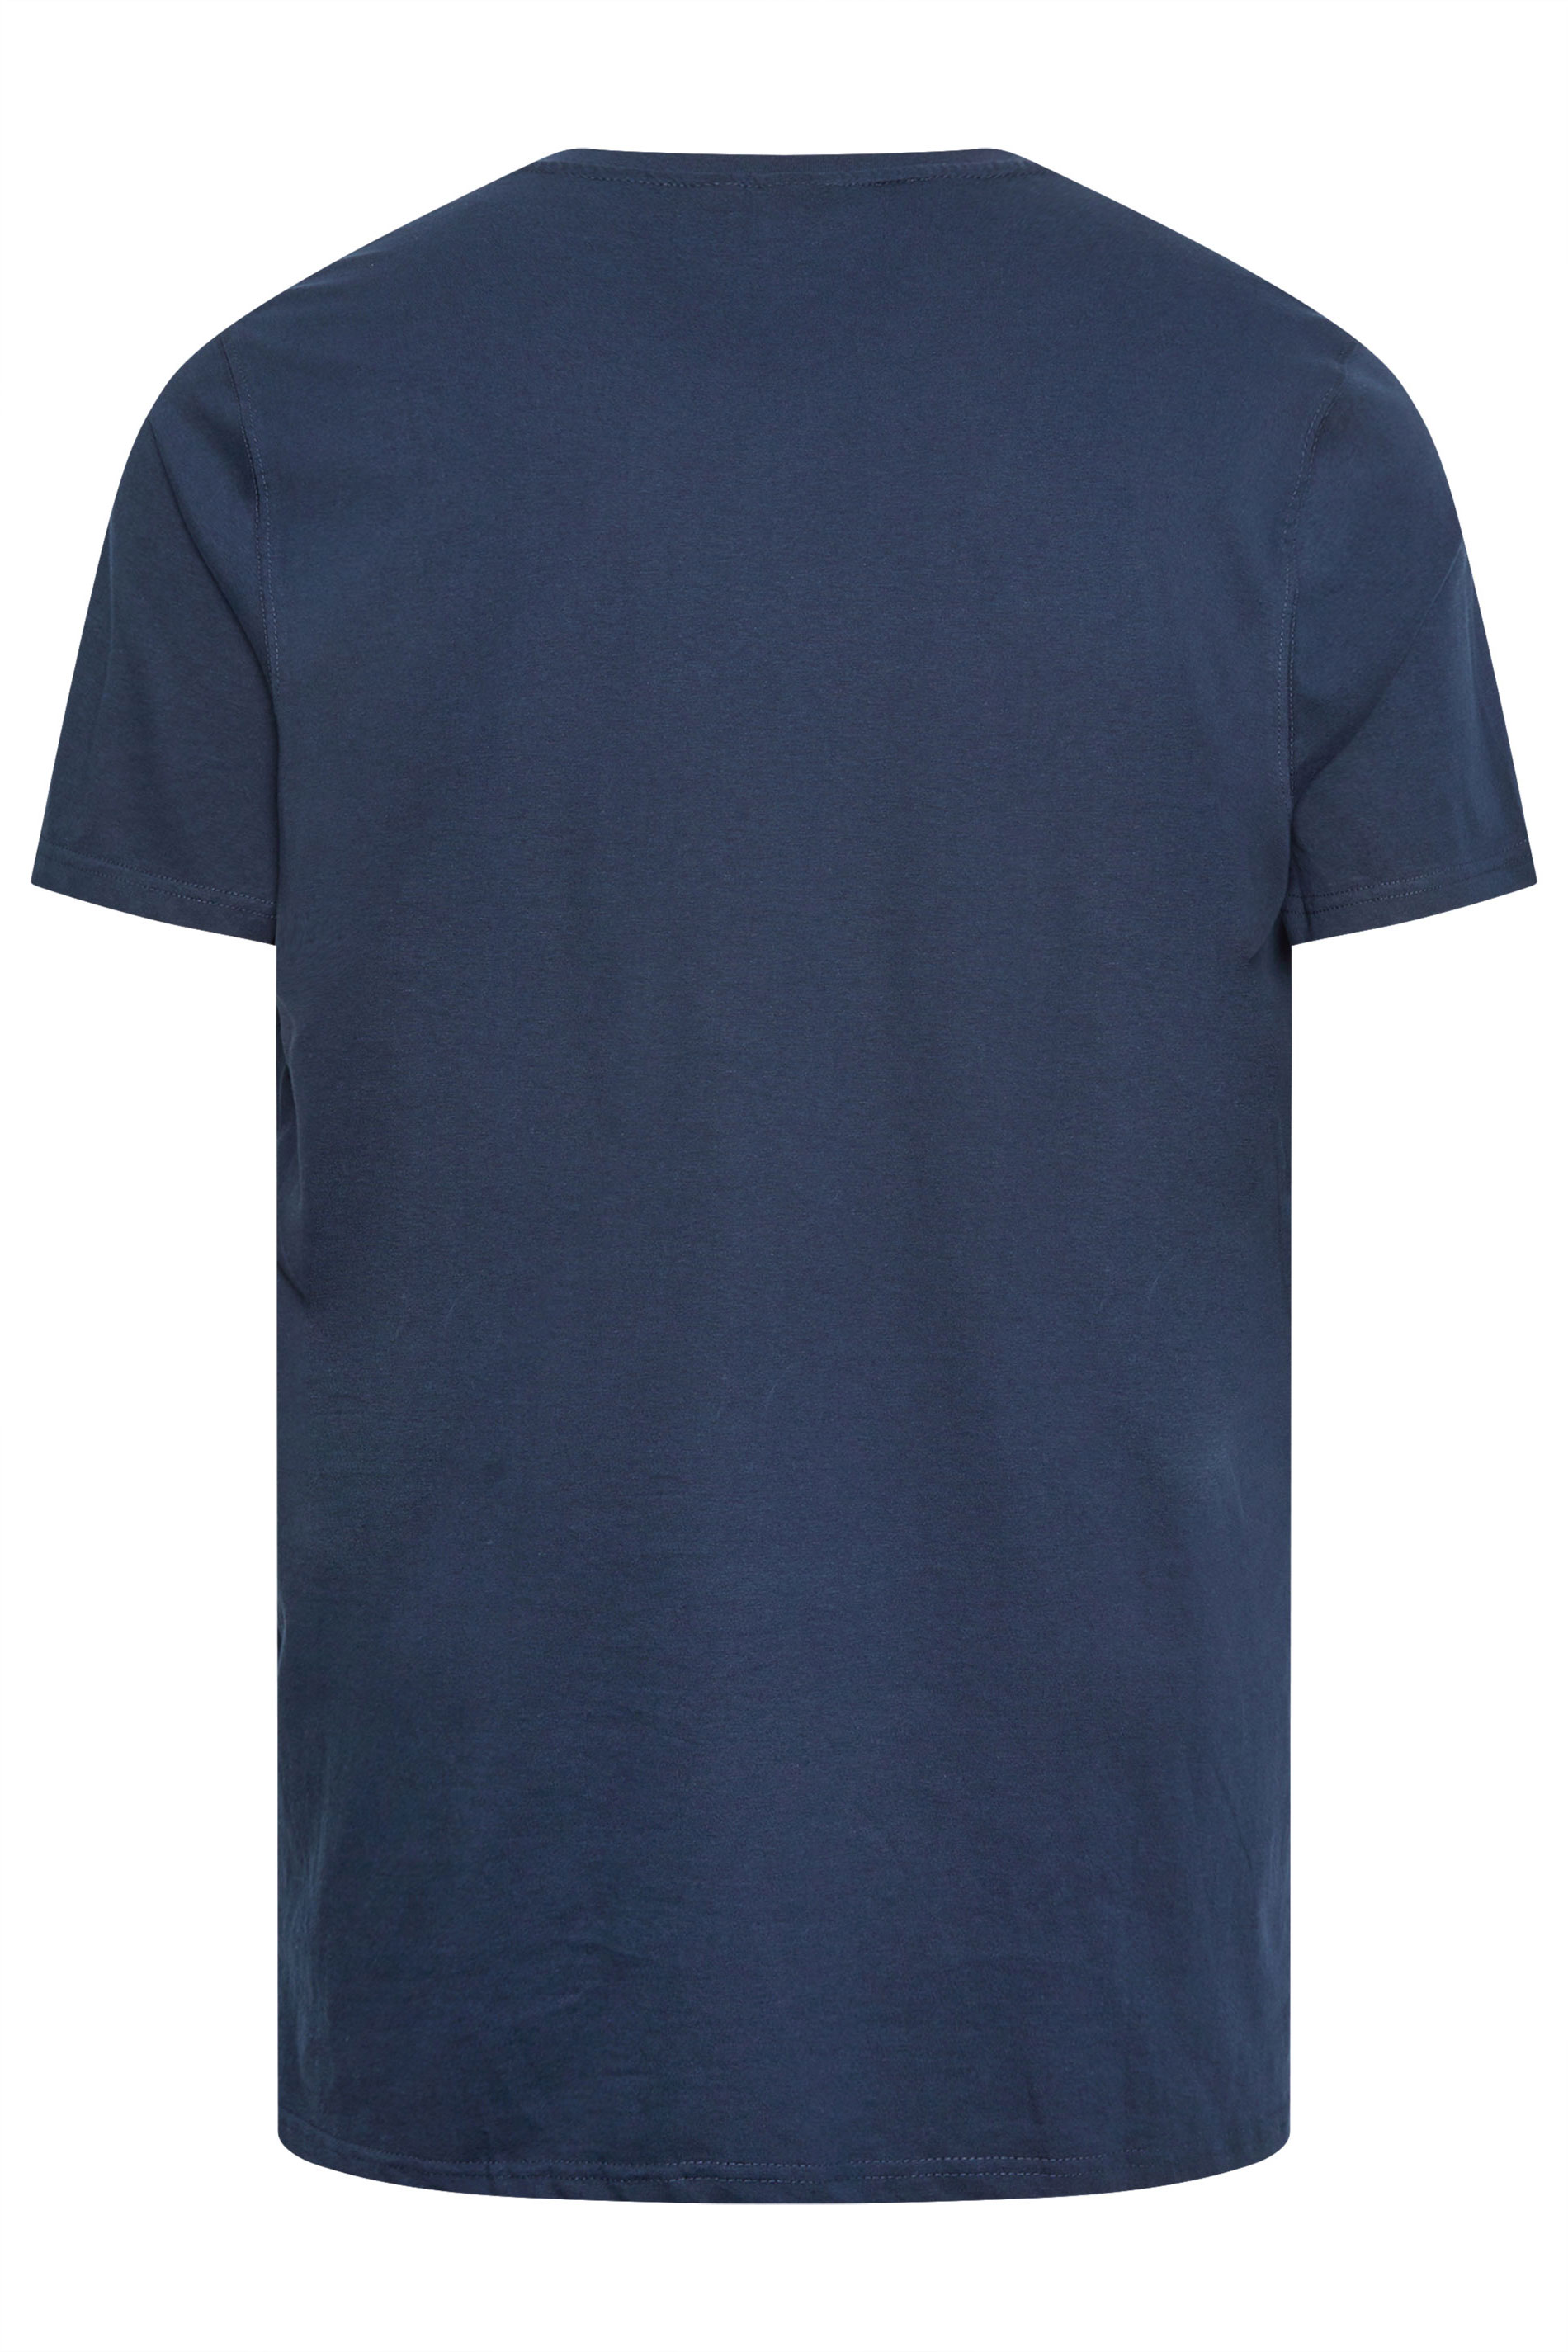 D555 Big & Tall Navy Blue Short Sleeve T-Shirt | BadRhino 3